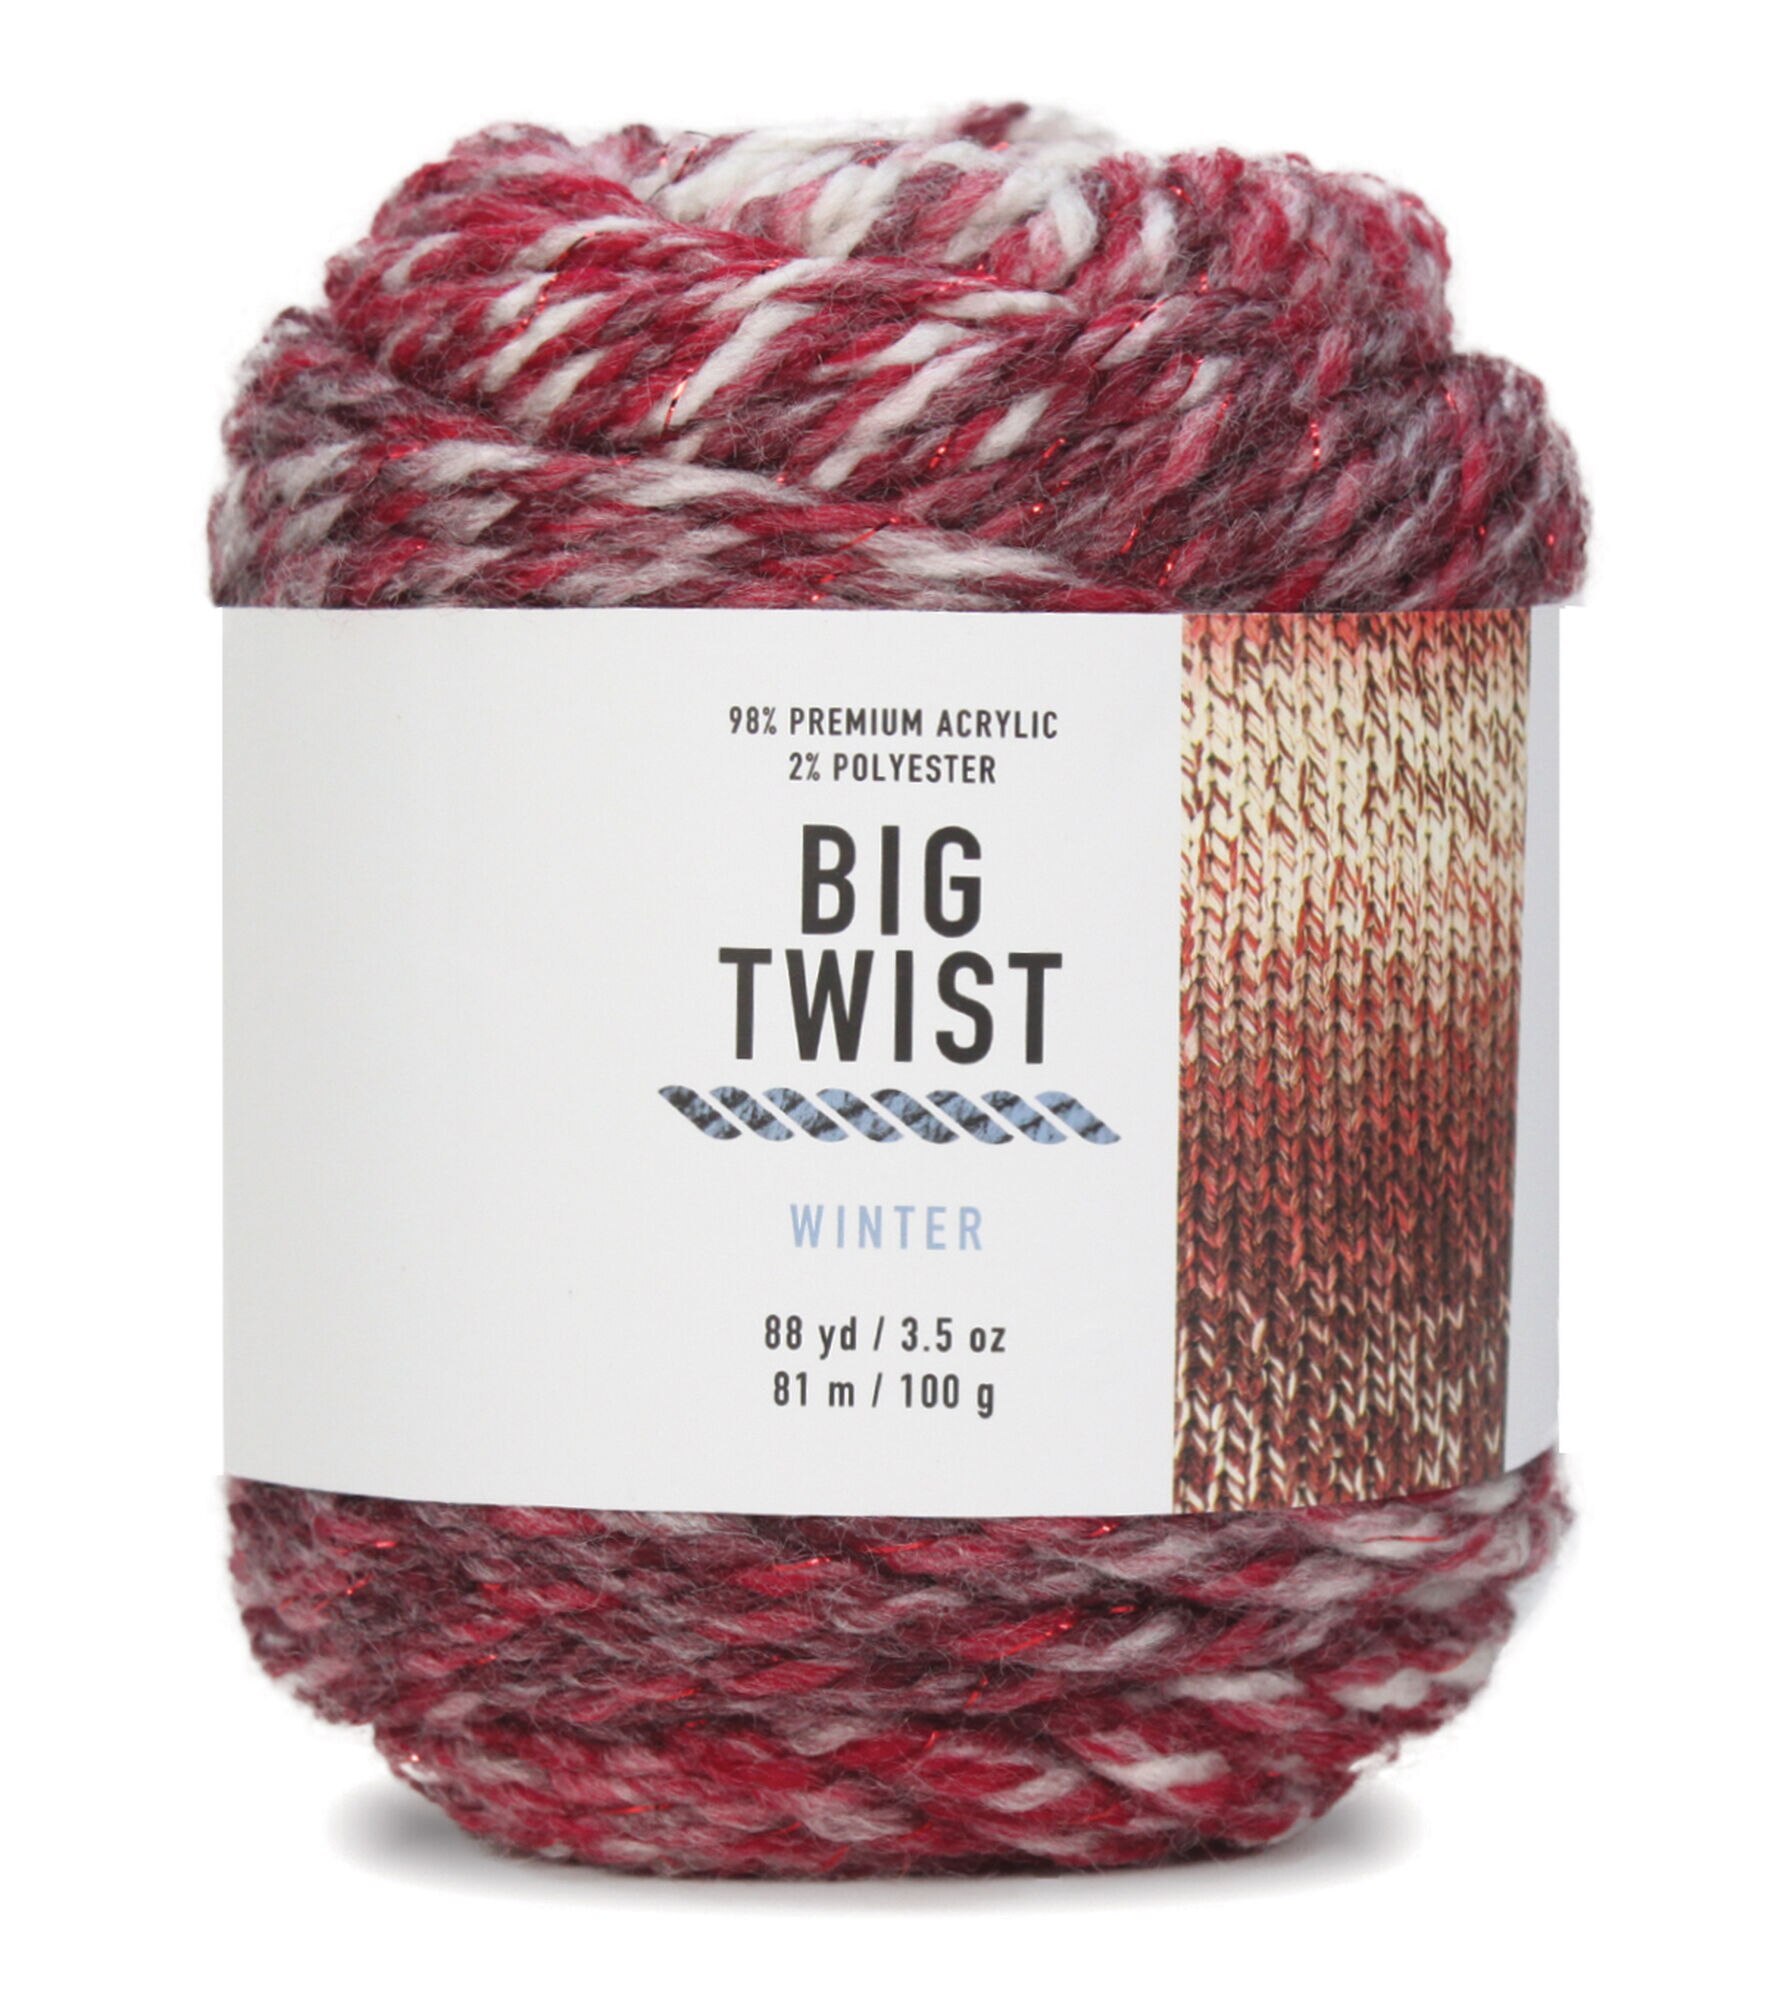 Big Twist Tweed Yarn - DARK GREEN - LOT #638245